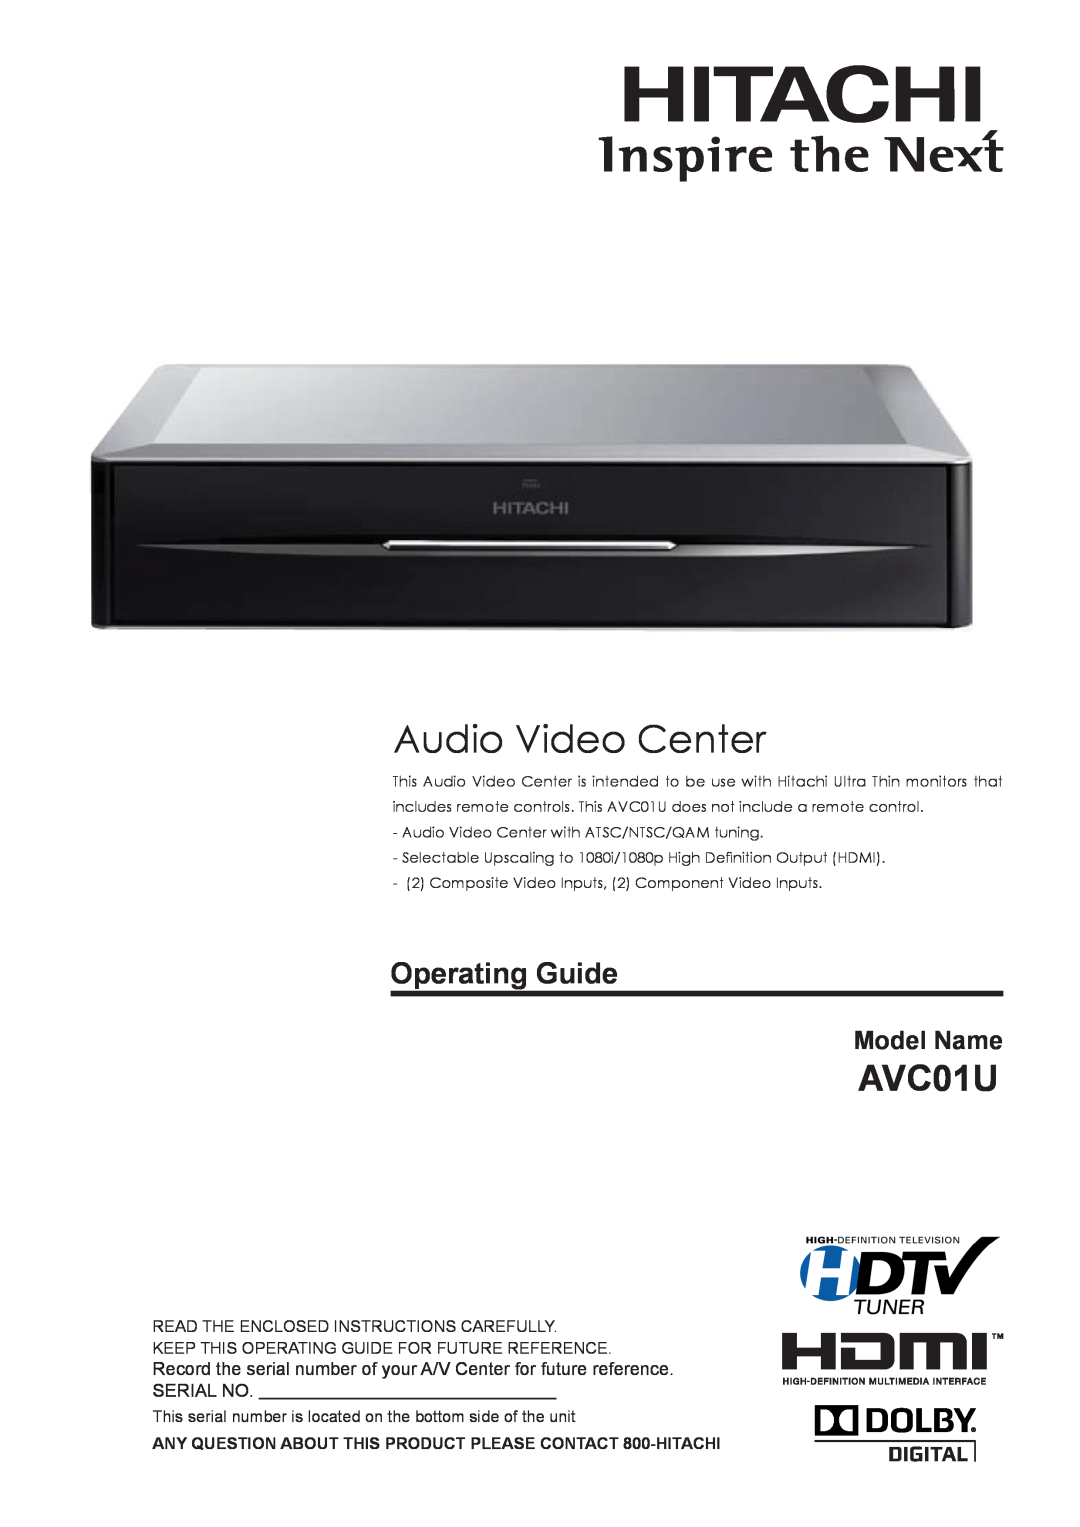 Hitachi AVC01U manual Audio Video Center, Operating Guide, Model Name 